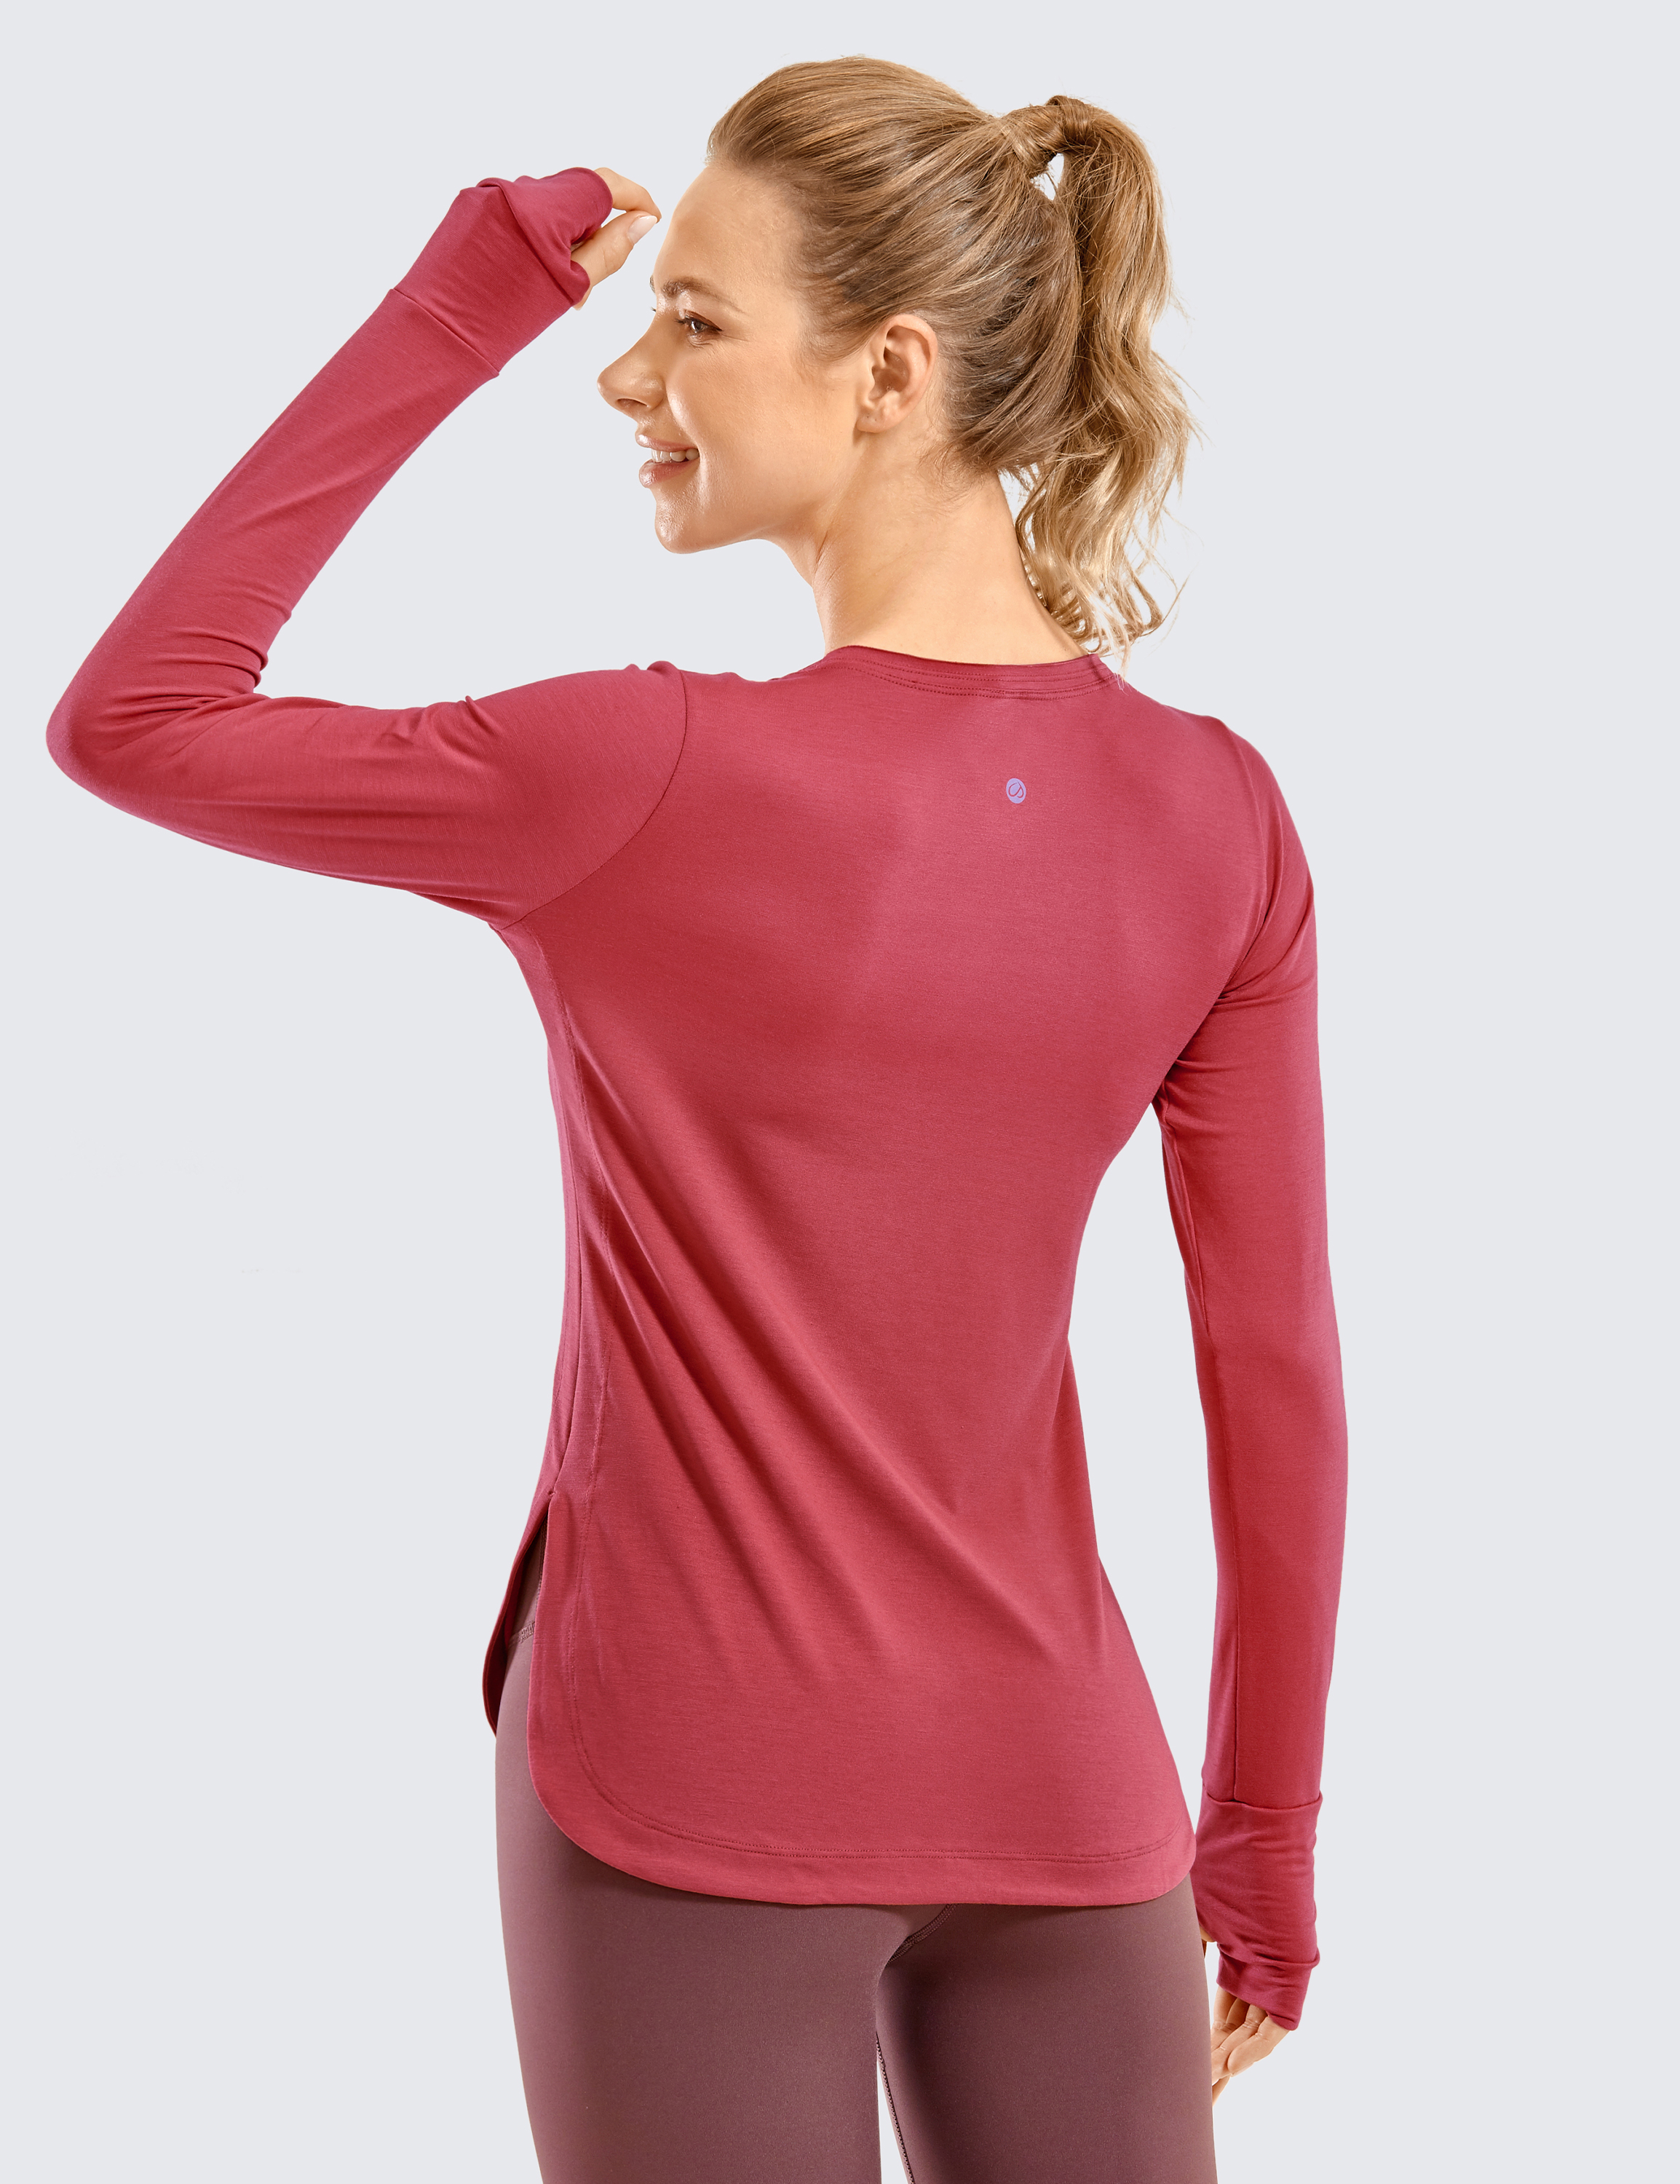 CRZ YOGA Women Sport Shirt Hiking Running Workout Long Sleeve Top with Thumbhole | eBay